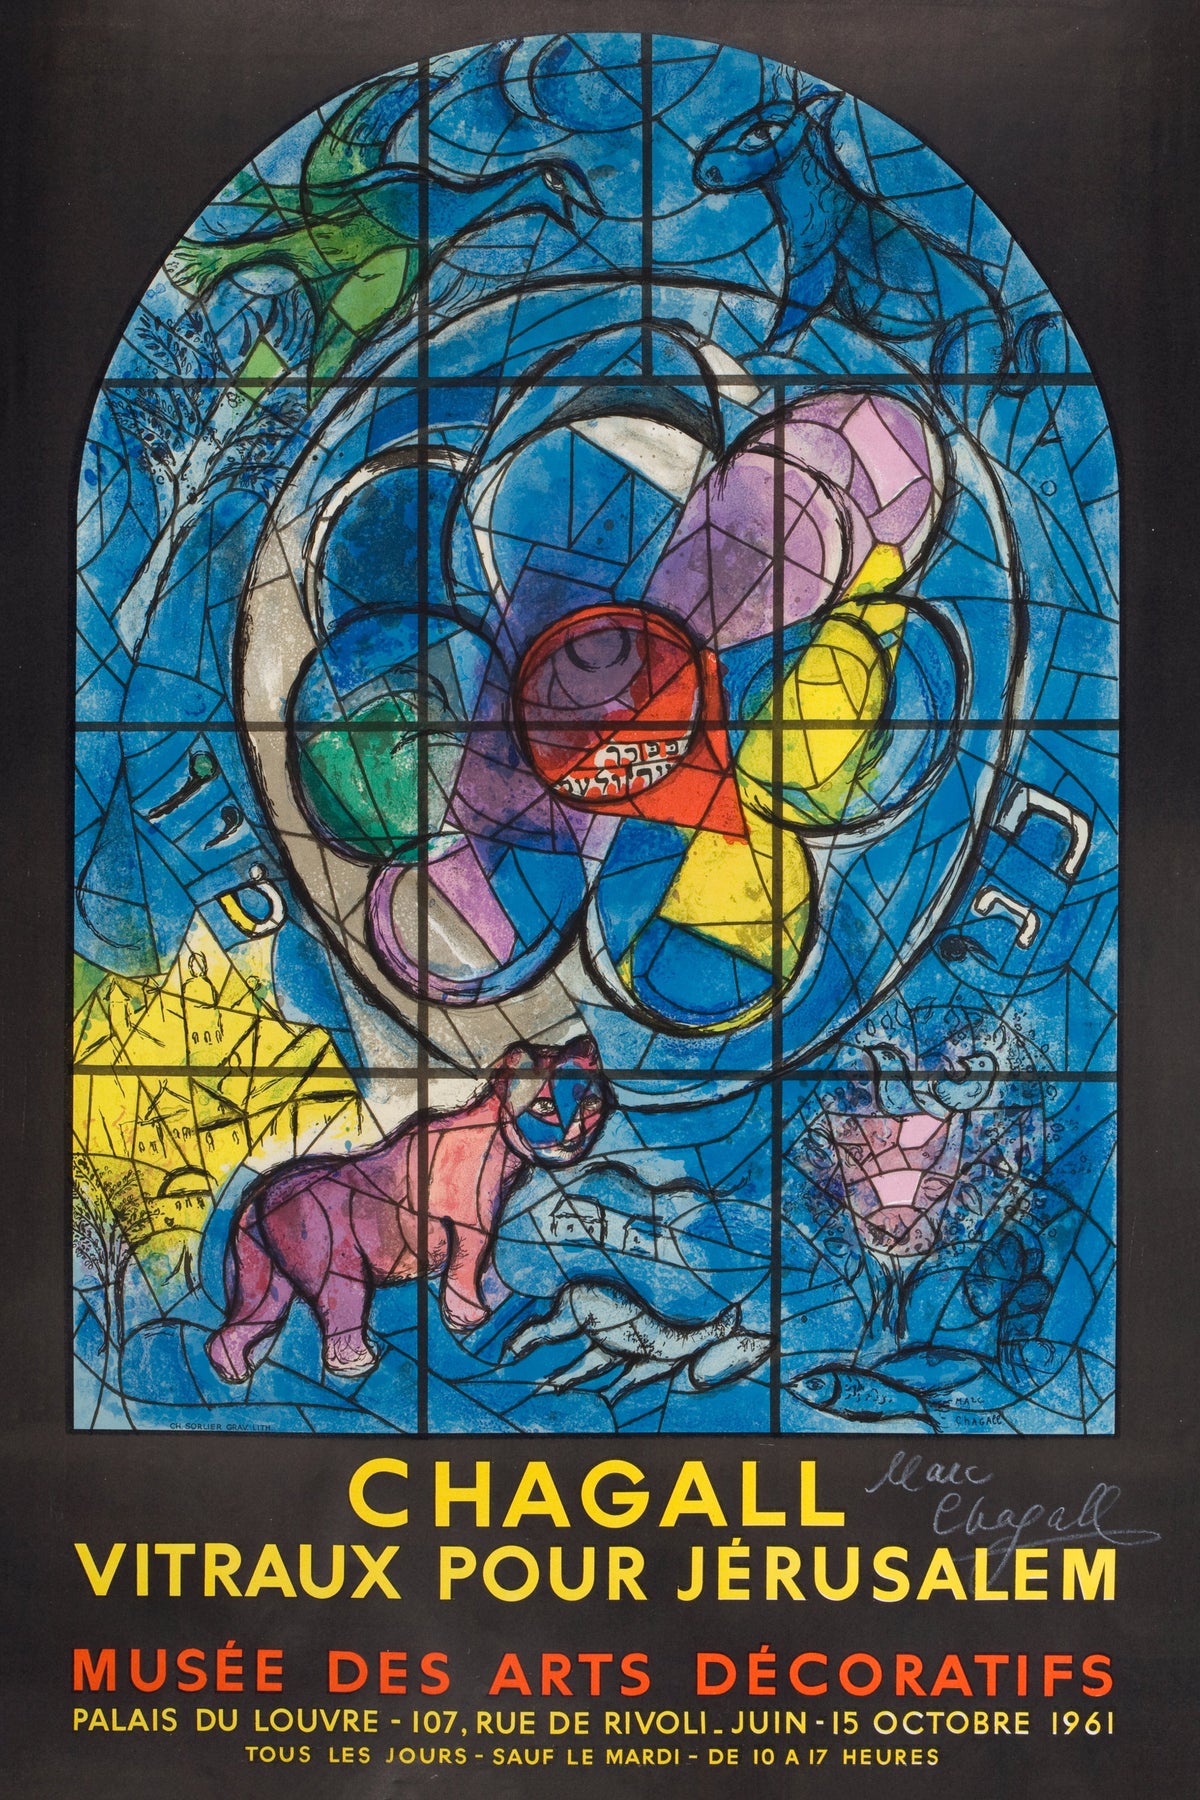 MARC CHAGALL (Belorussian, 1887-1985). Chagall. Vitraux pour Jerusalem, 1961